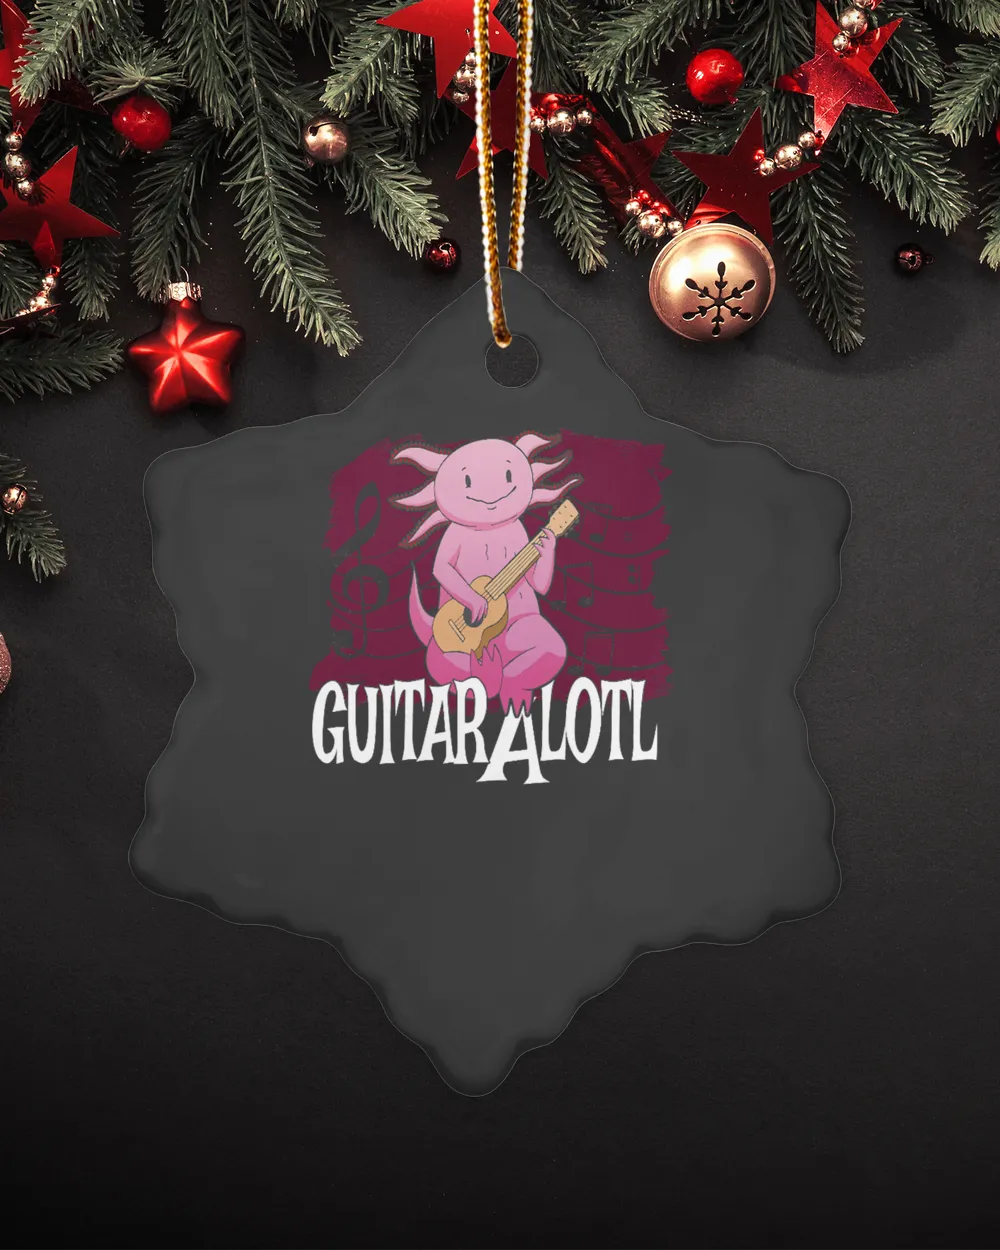 Axolotl Play Guitar with Notes and Melody 295